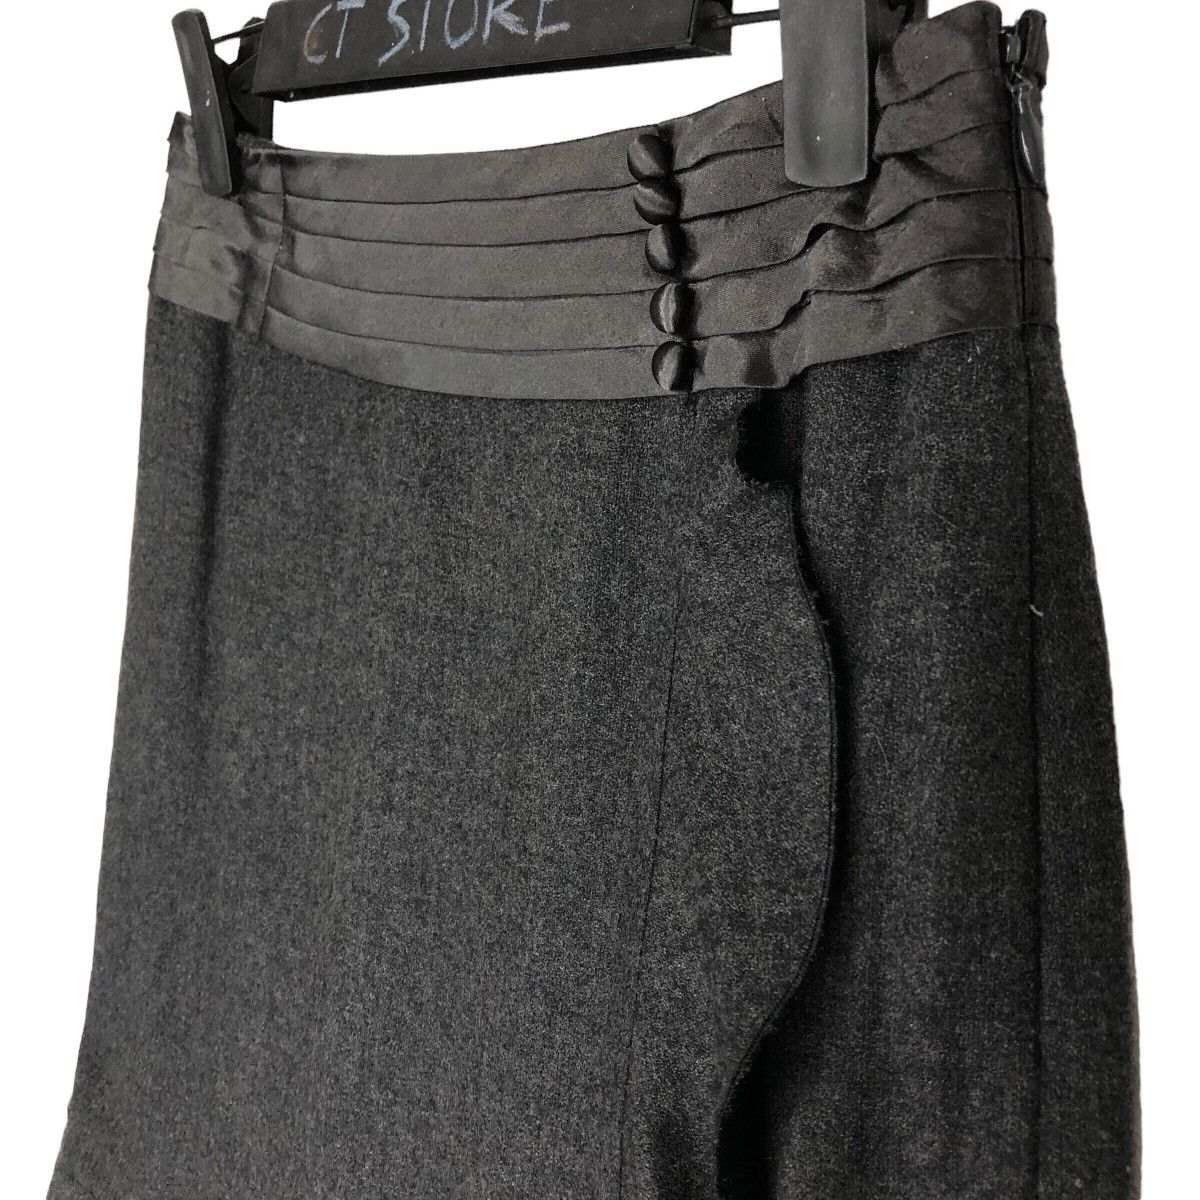 Franco Ferraro Milano Ruffled Skirt Grey - 3